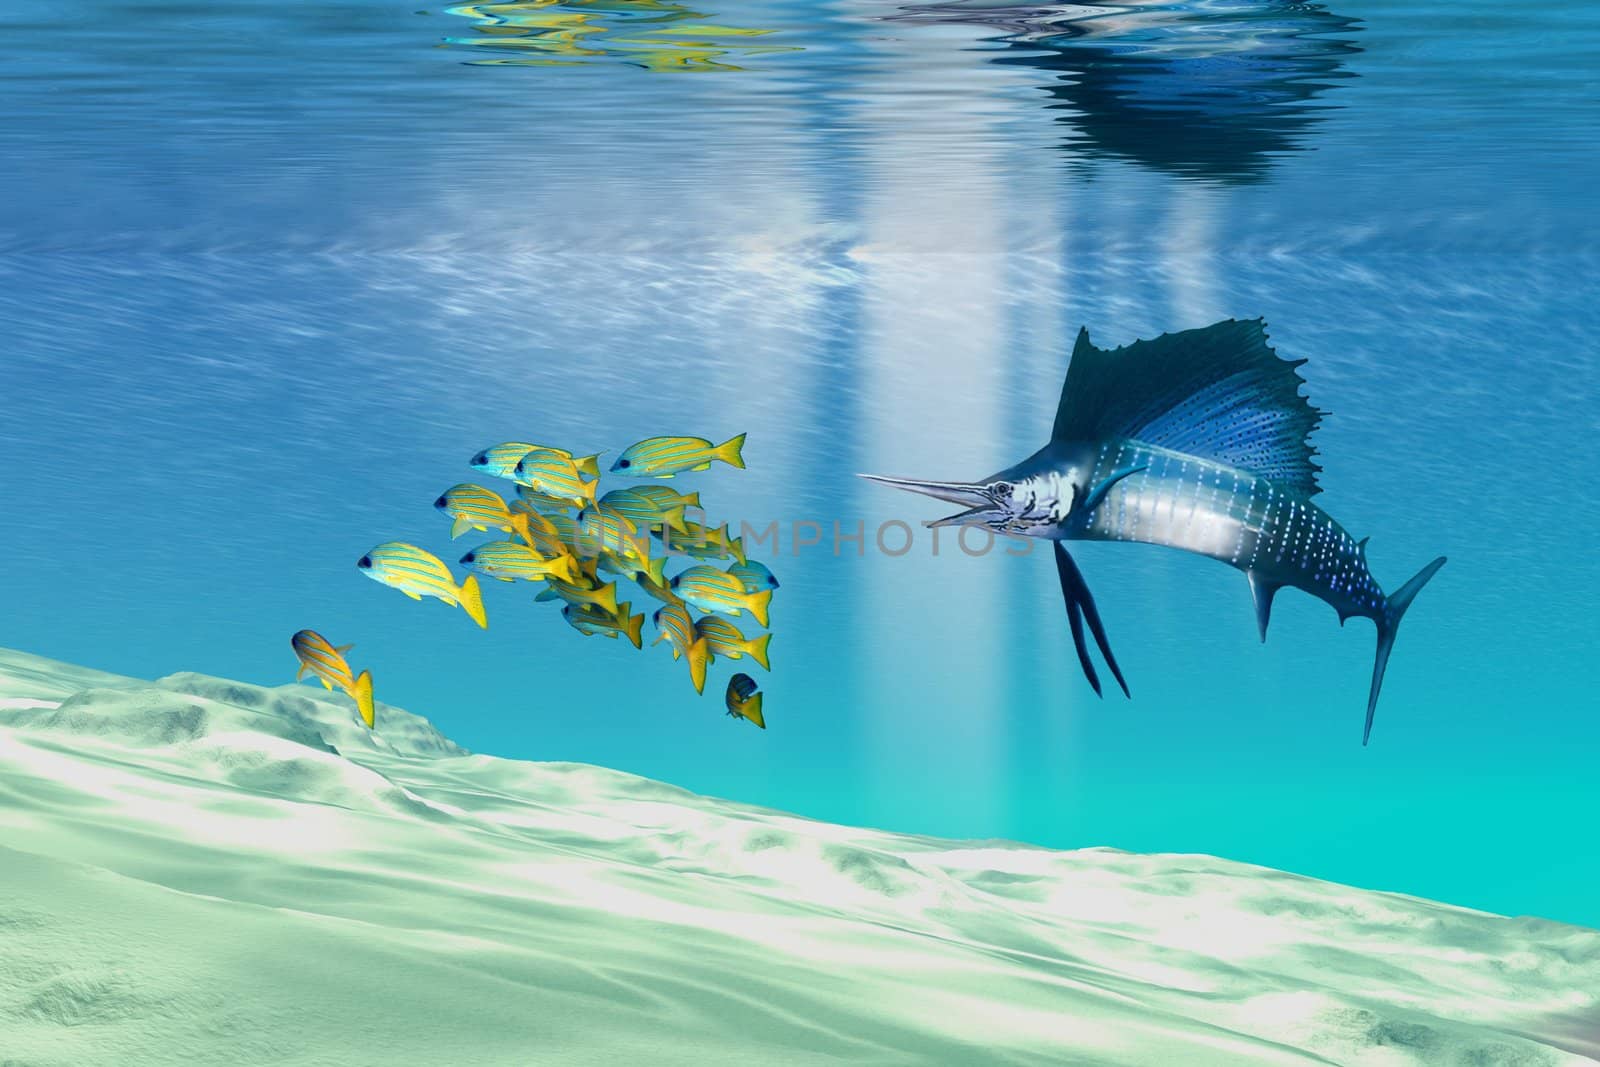 A sailfish hunts prey on a sandy reef.